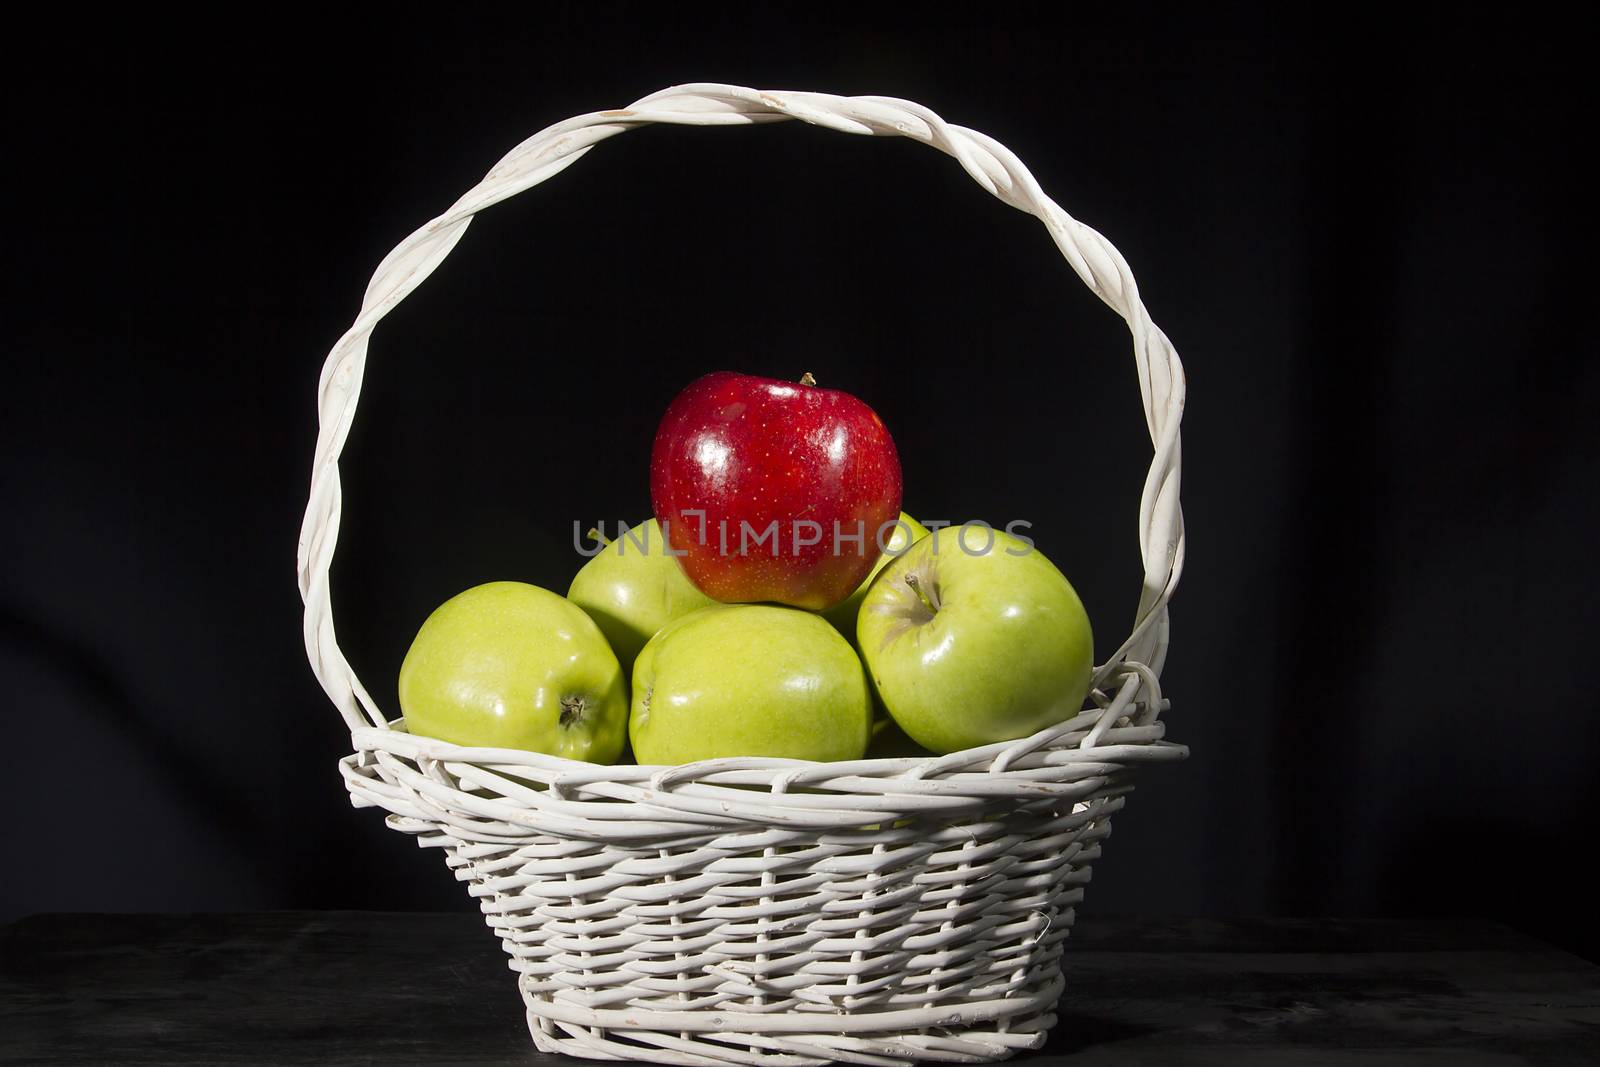 Ripe apples in a wicker basket on a black background